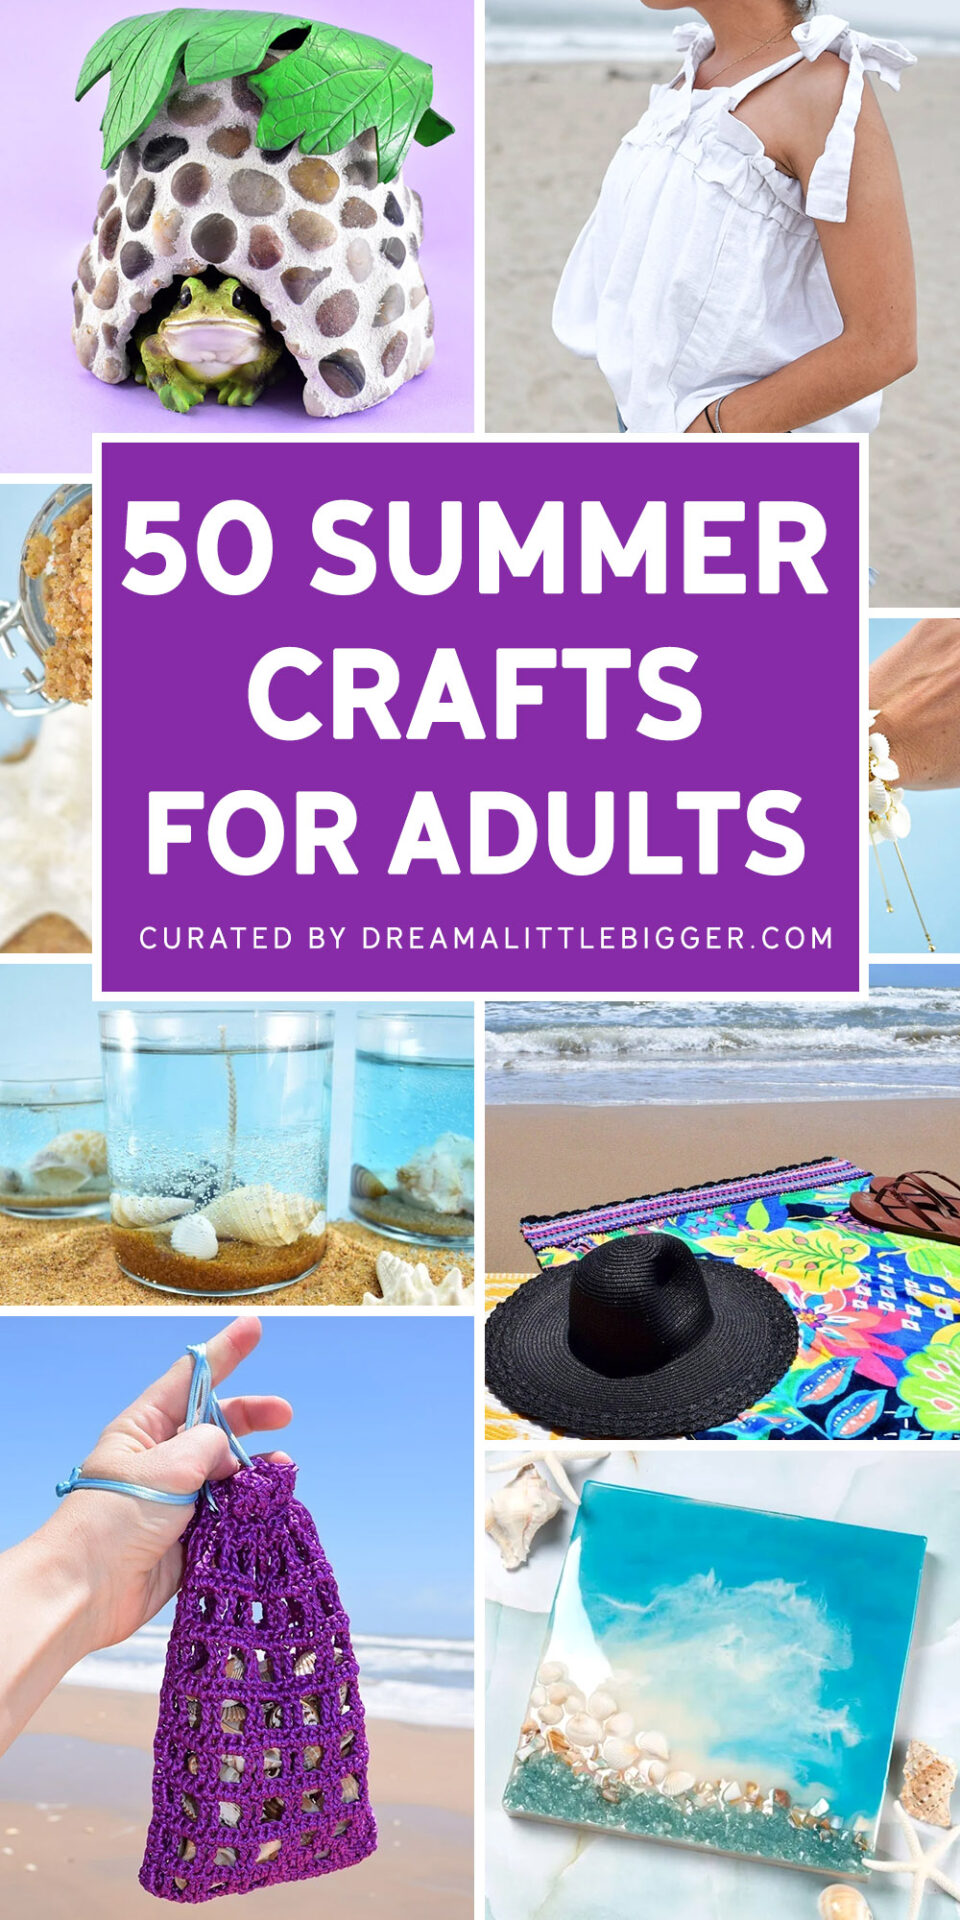 Beach in a Basket: Using the Seashells You Found - Amy Latta Creations